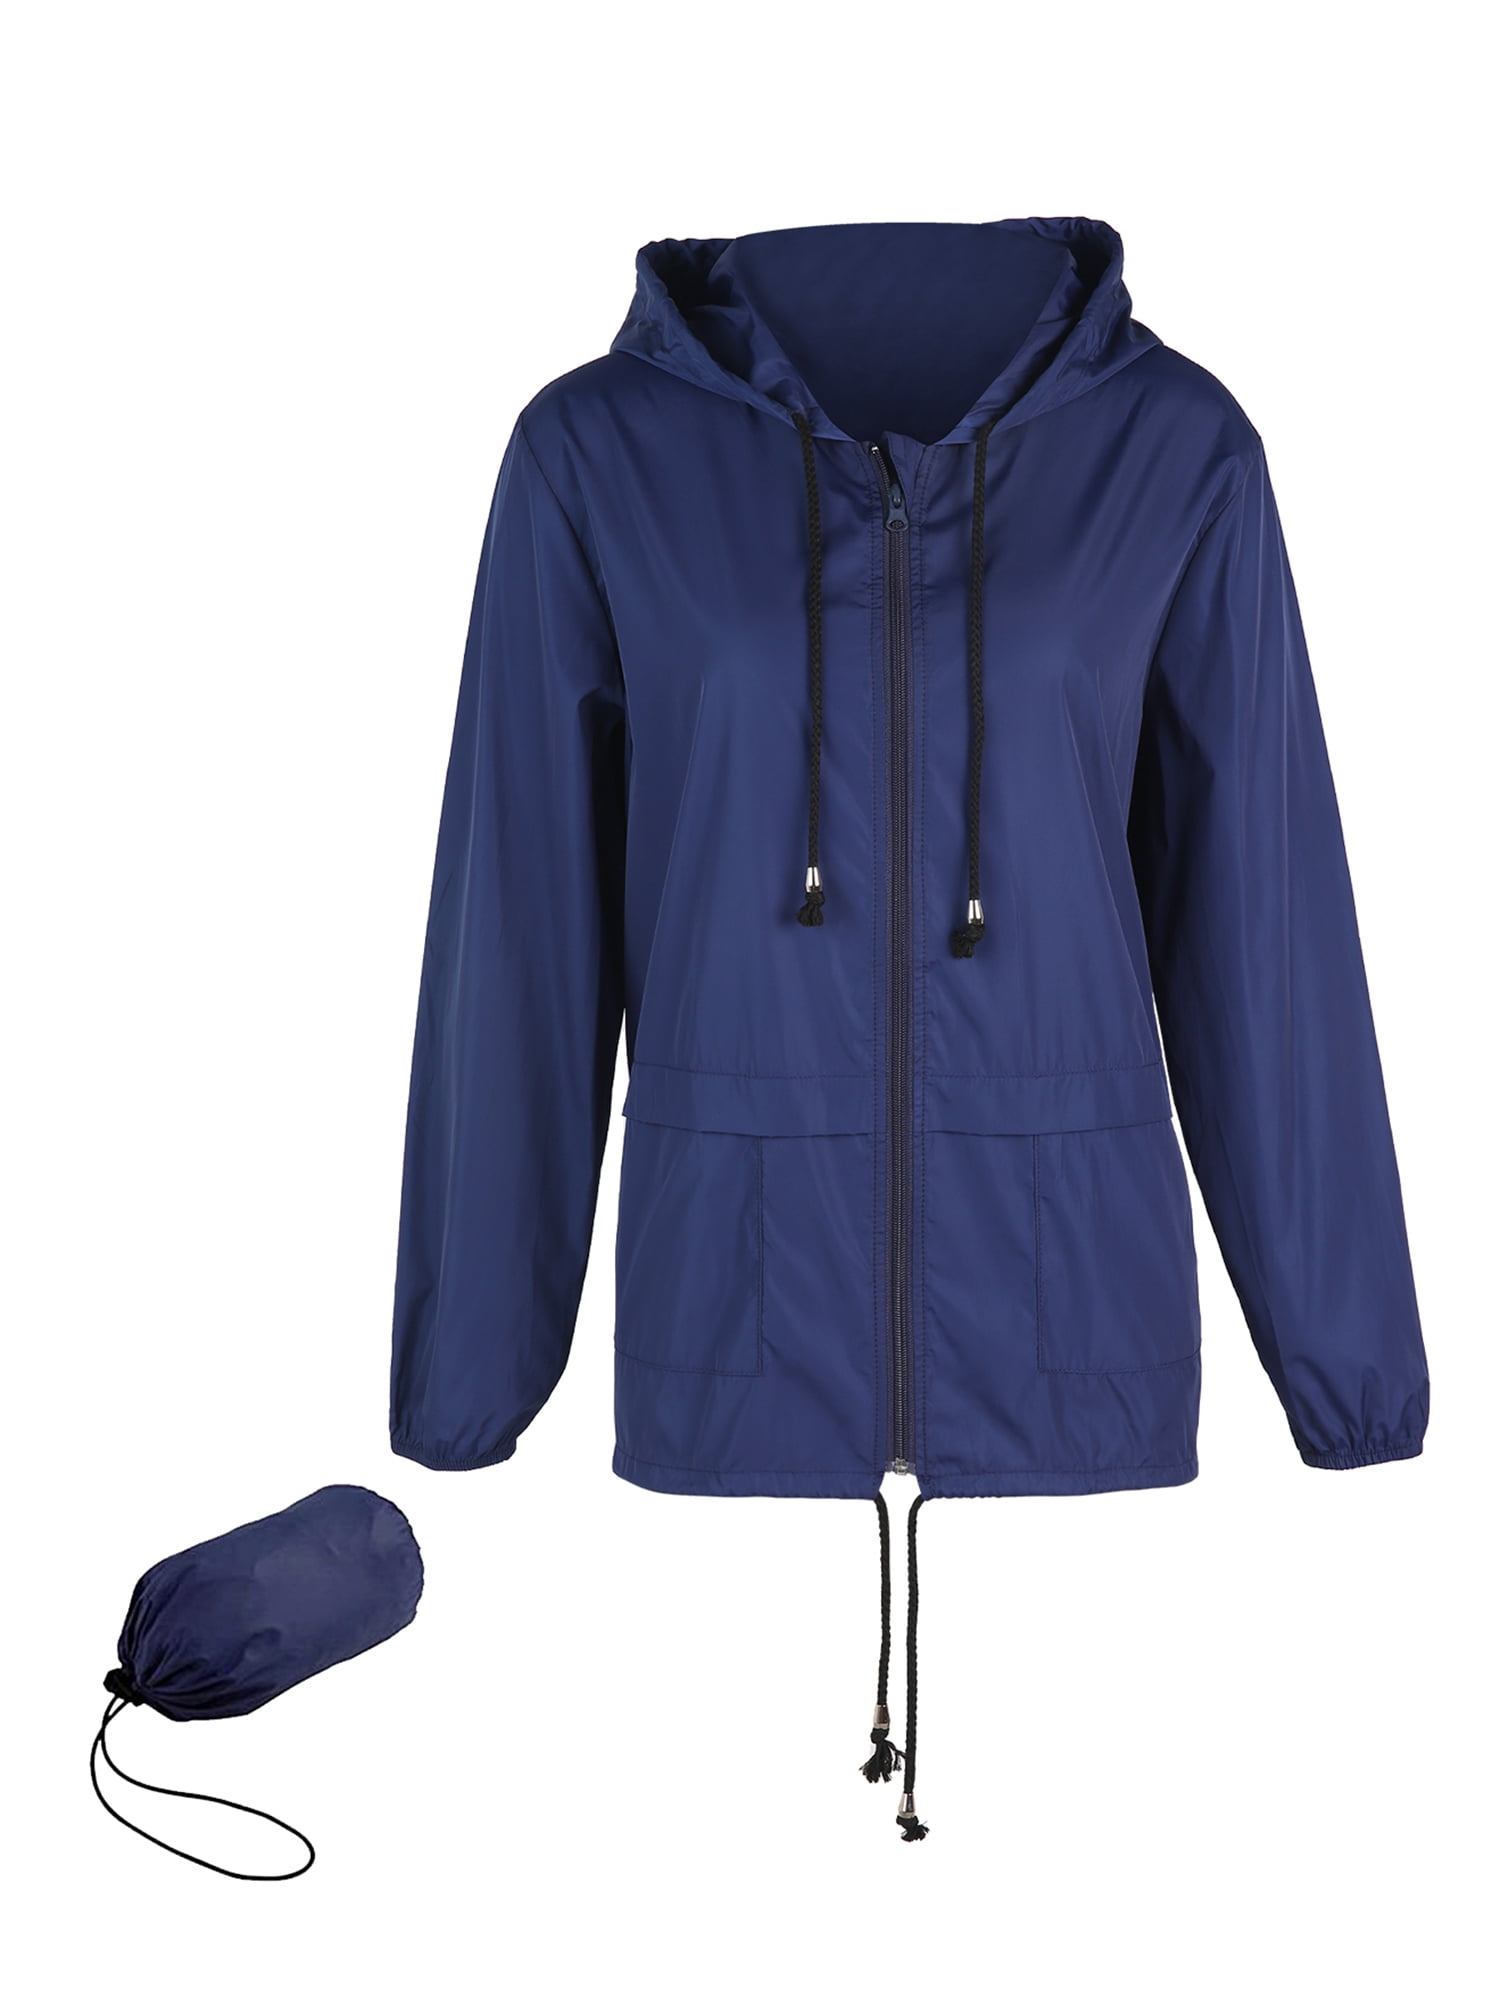 ESASSALY Raincoat Women Lightweight Waterproof Rain Jackets Packable ...